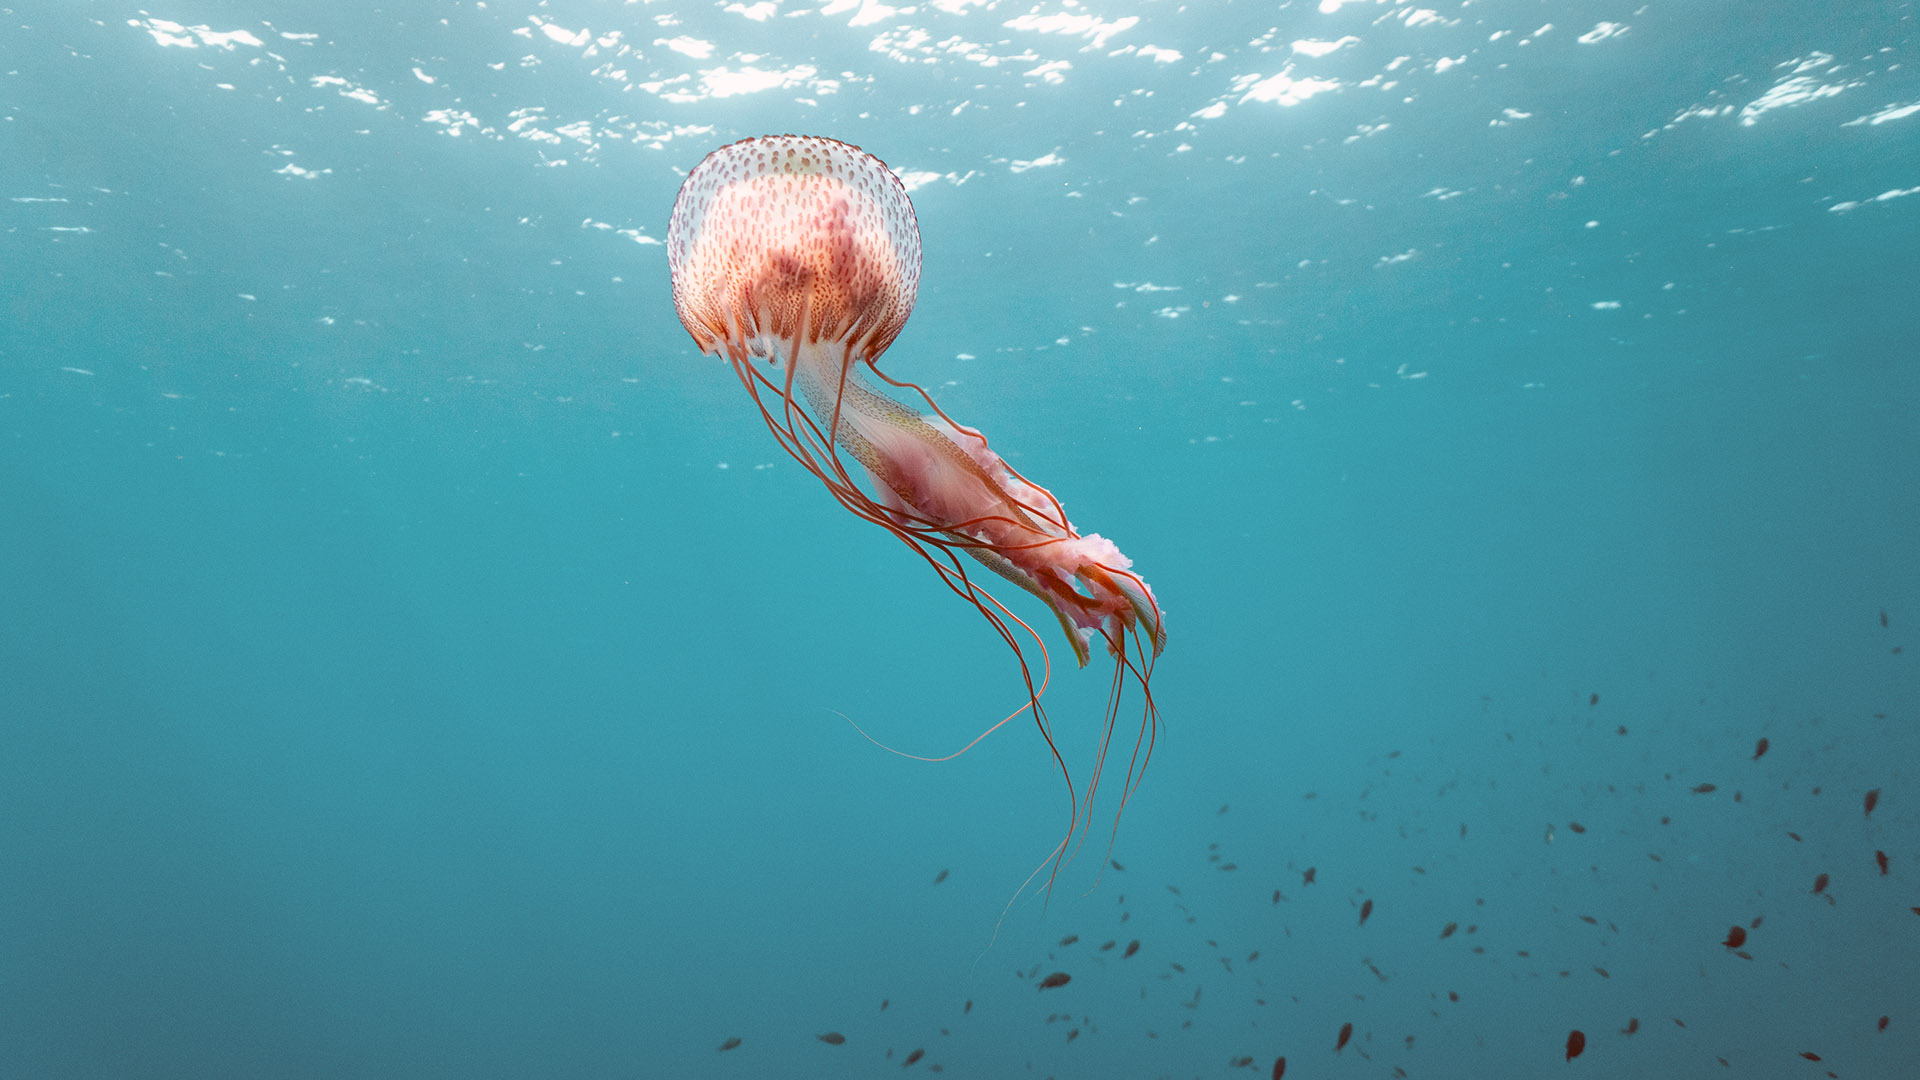 medusa-menorca-foto-julia-miralles.jpg 